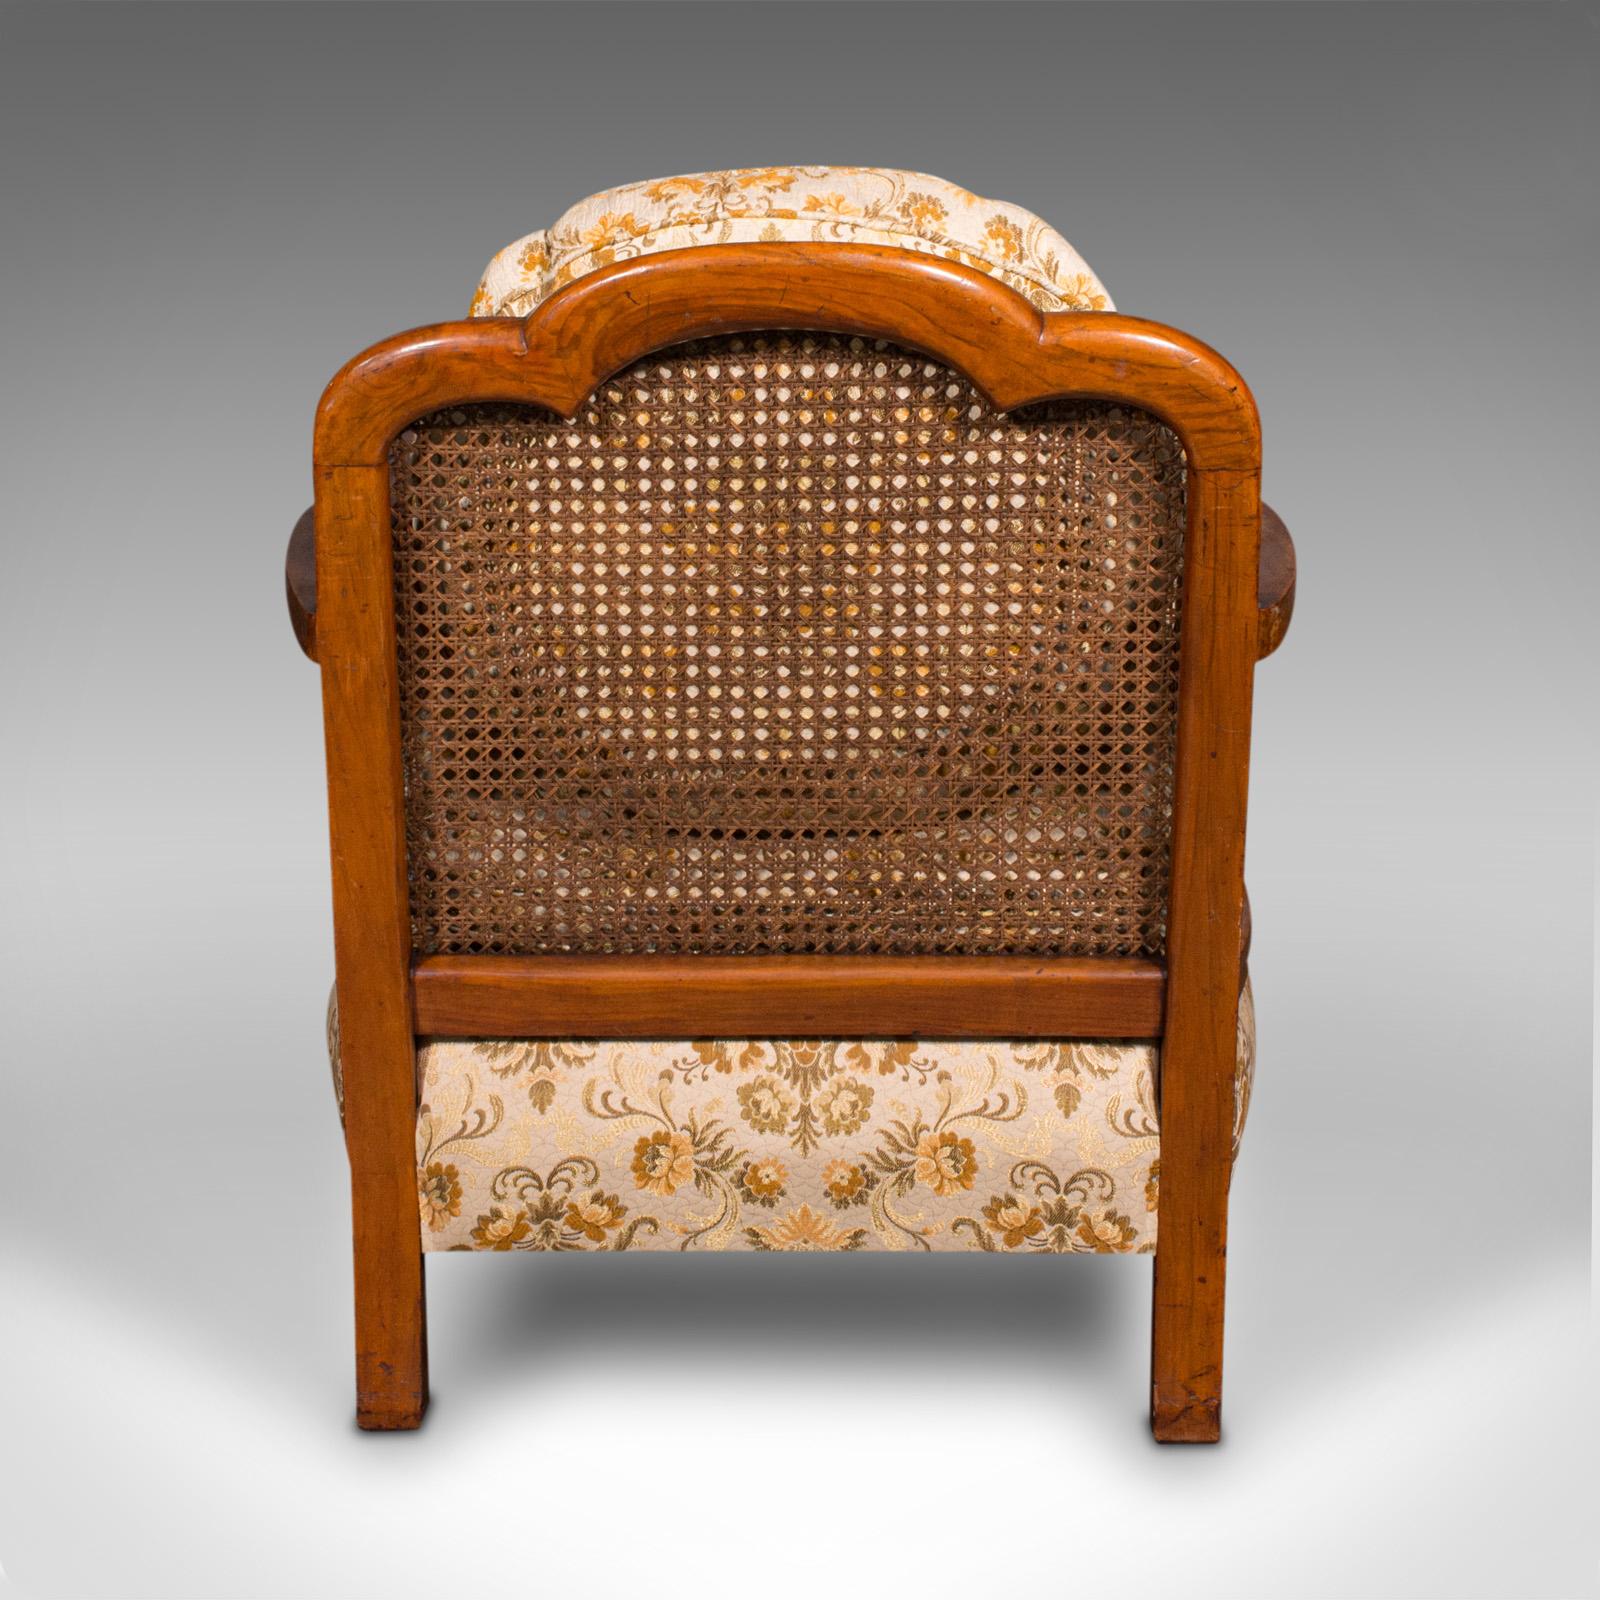 British Antique Bergere Sofa Suite, English, Walnut, 3 Seat Settee, Armchair, Edwardian